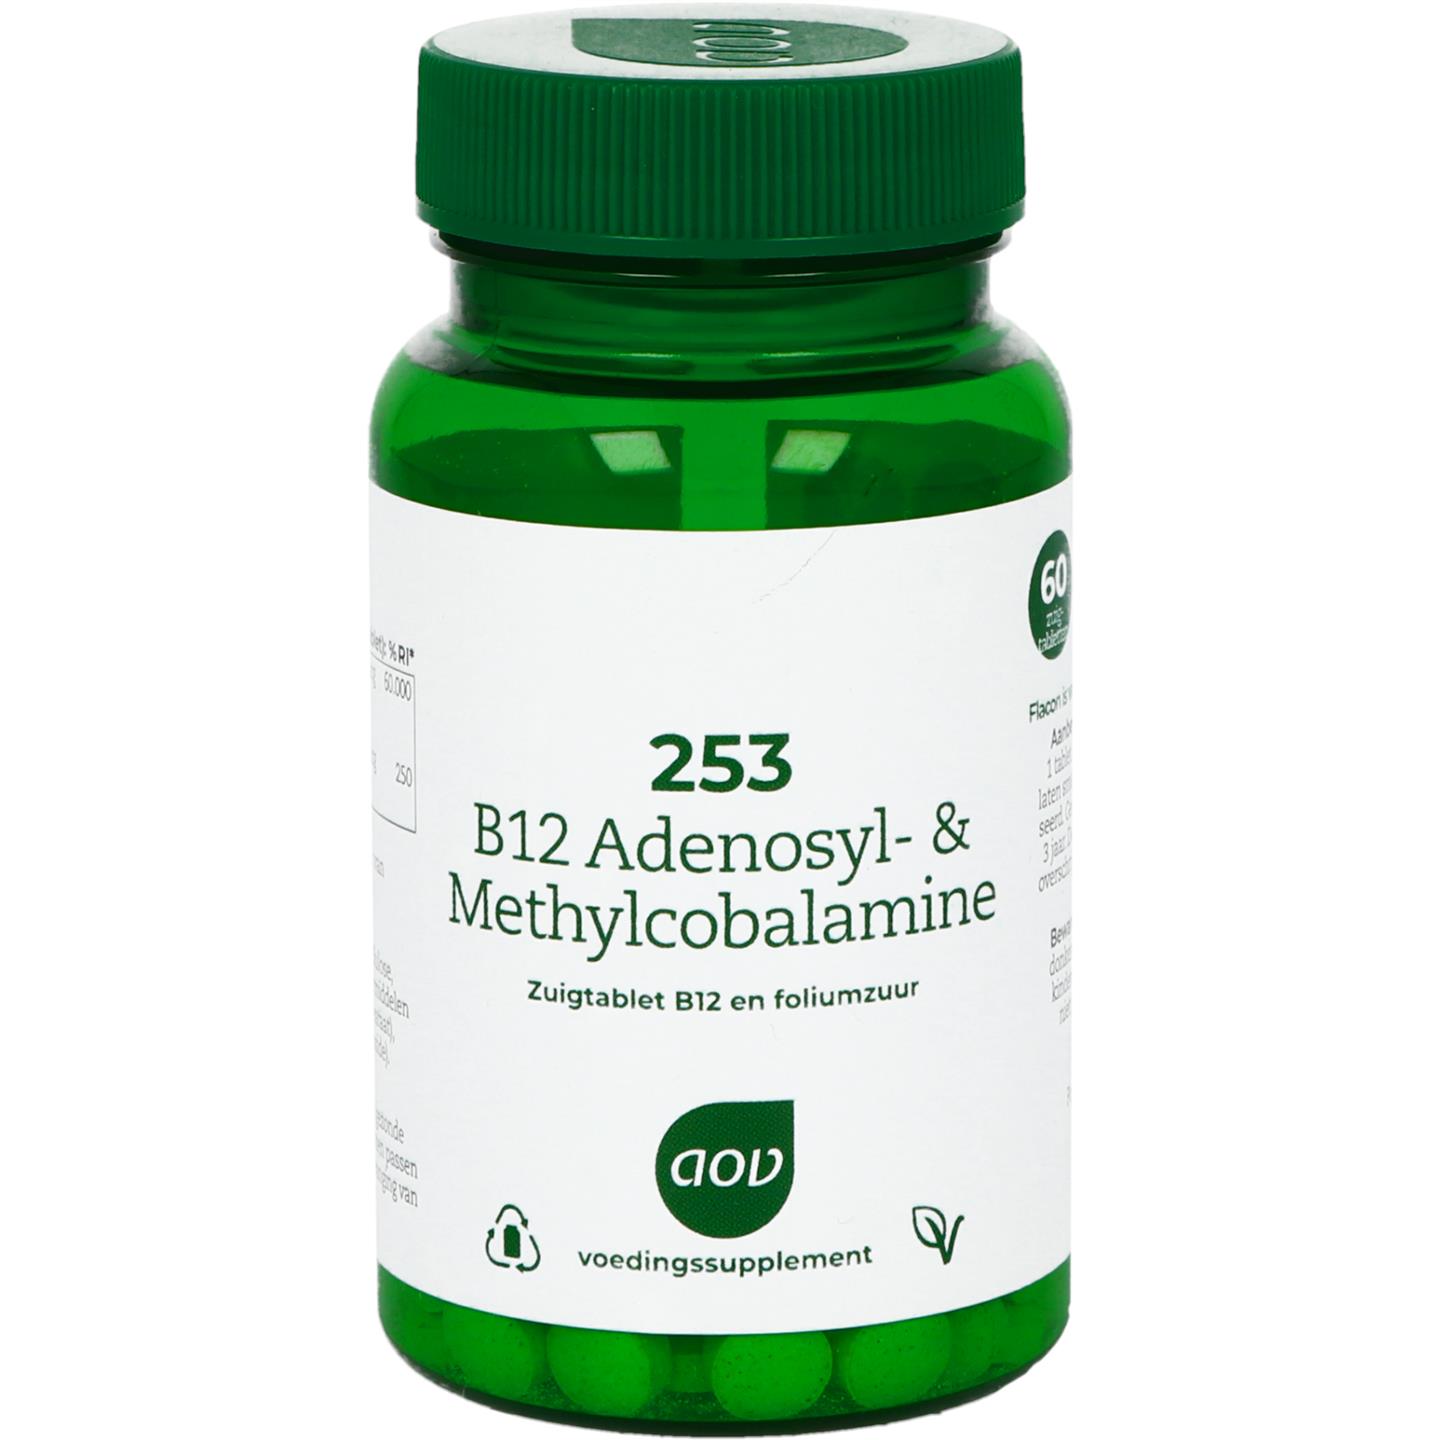 253 B12 Adenosyl- & Methylcobalamine